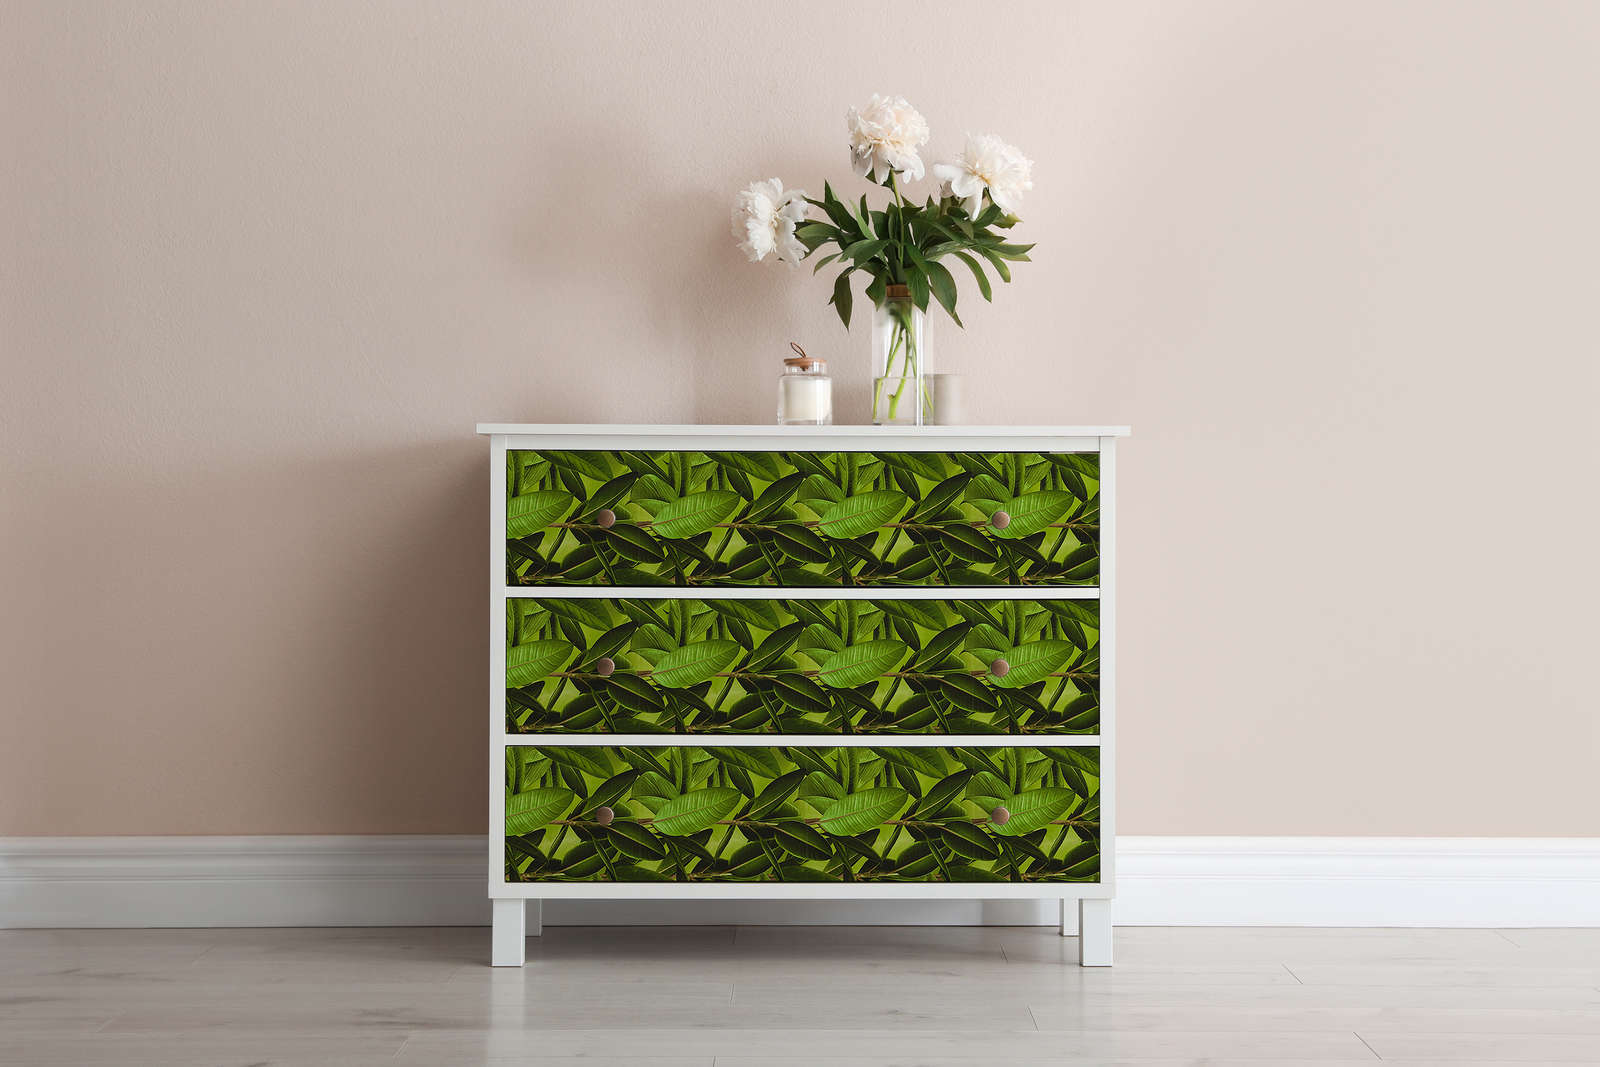             3D Tapetenpanel Blätter Design selbstklebend – Grün
        